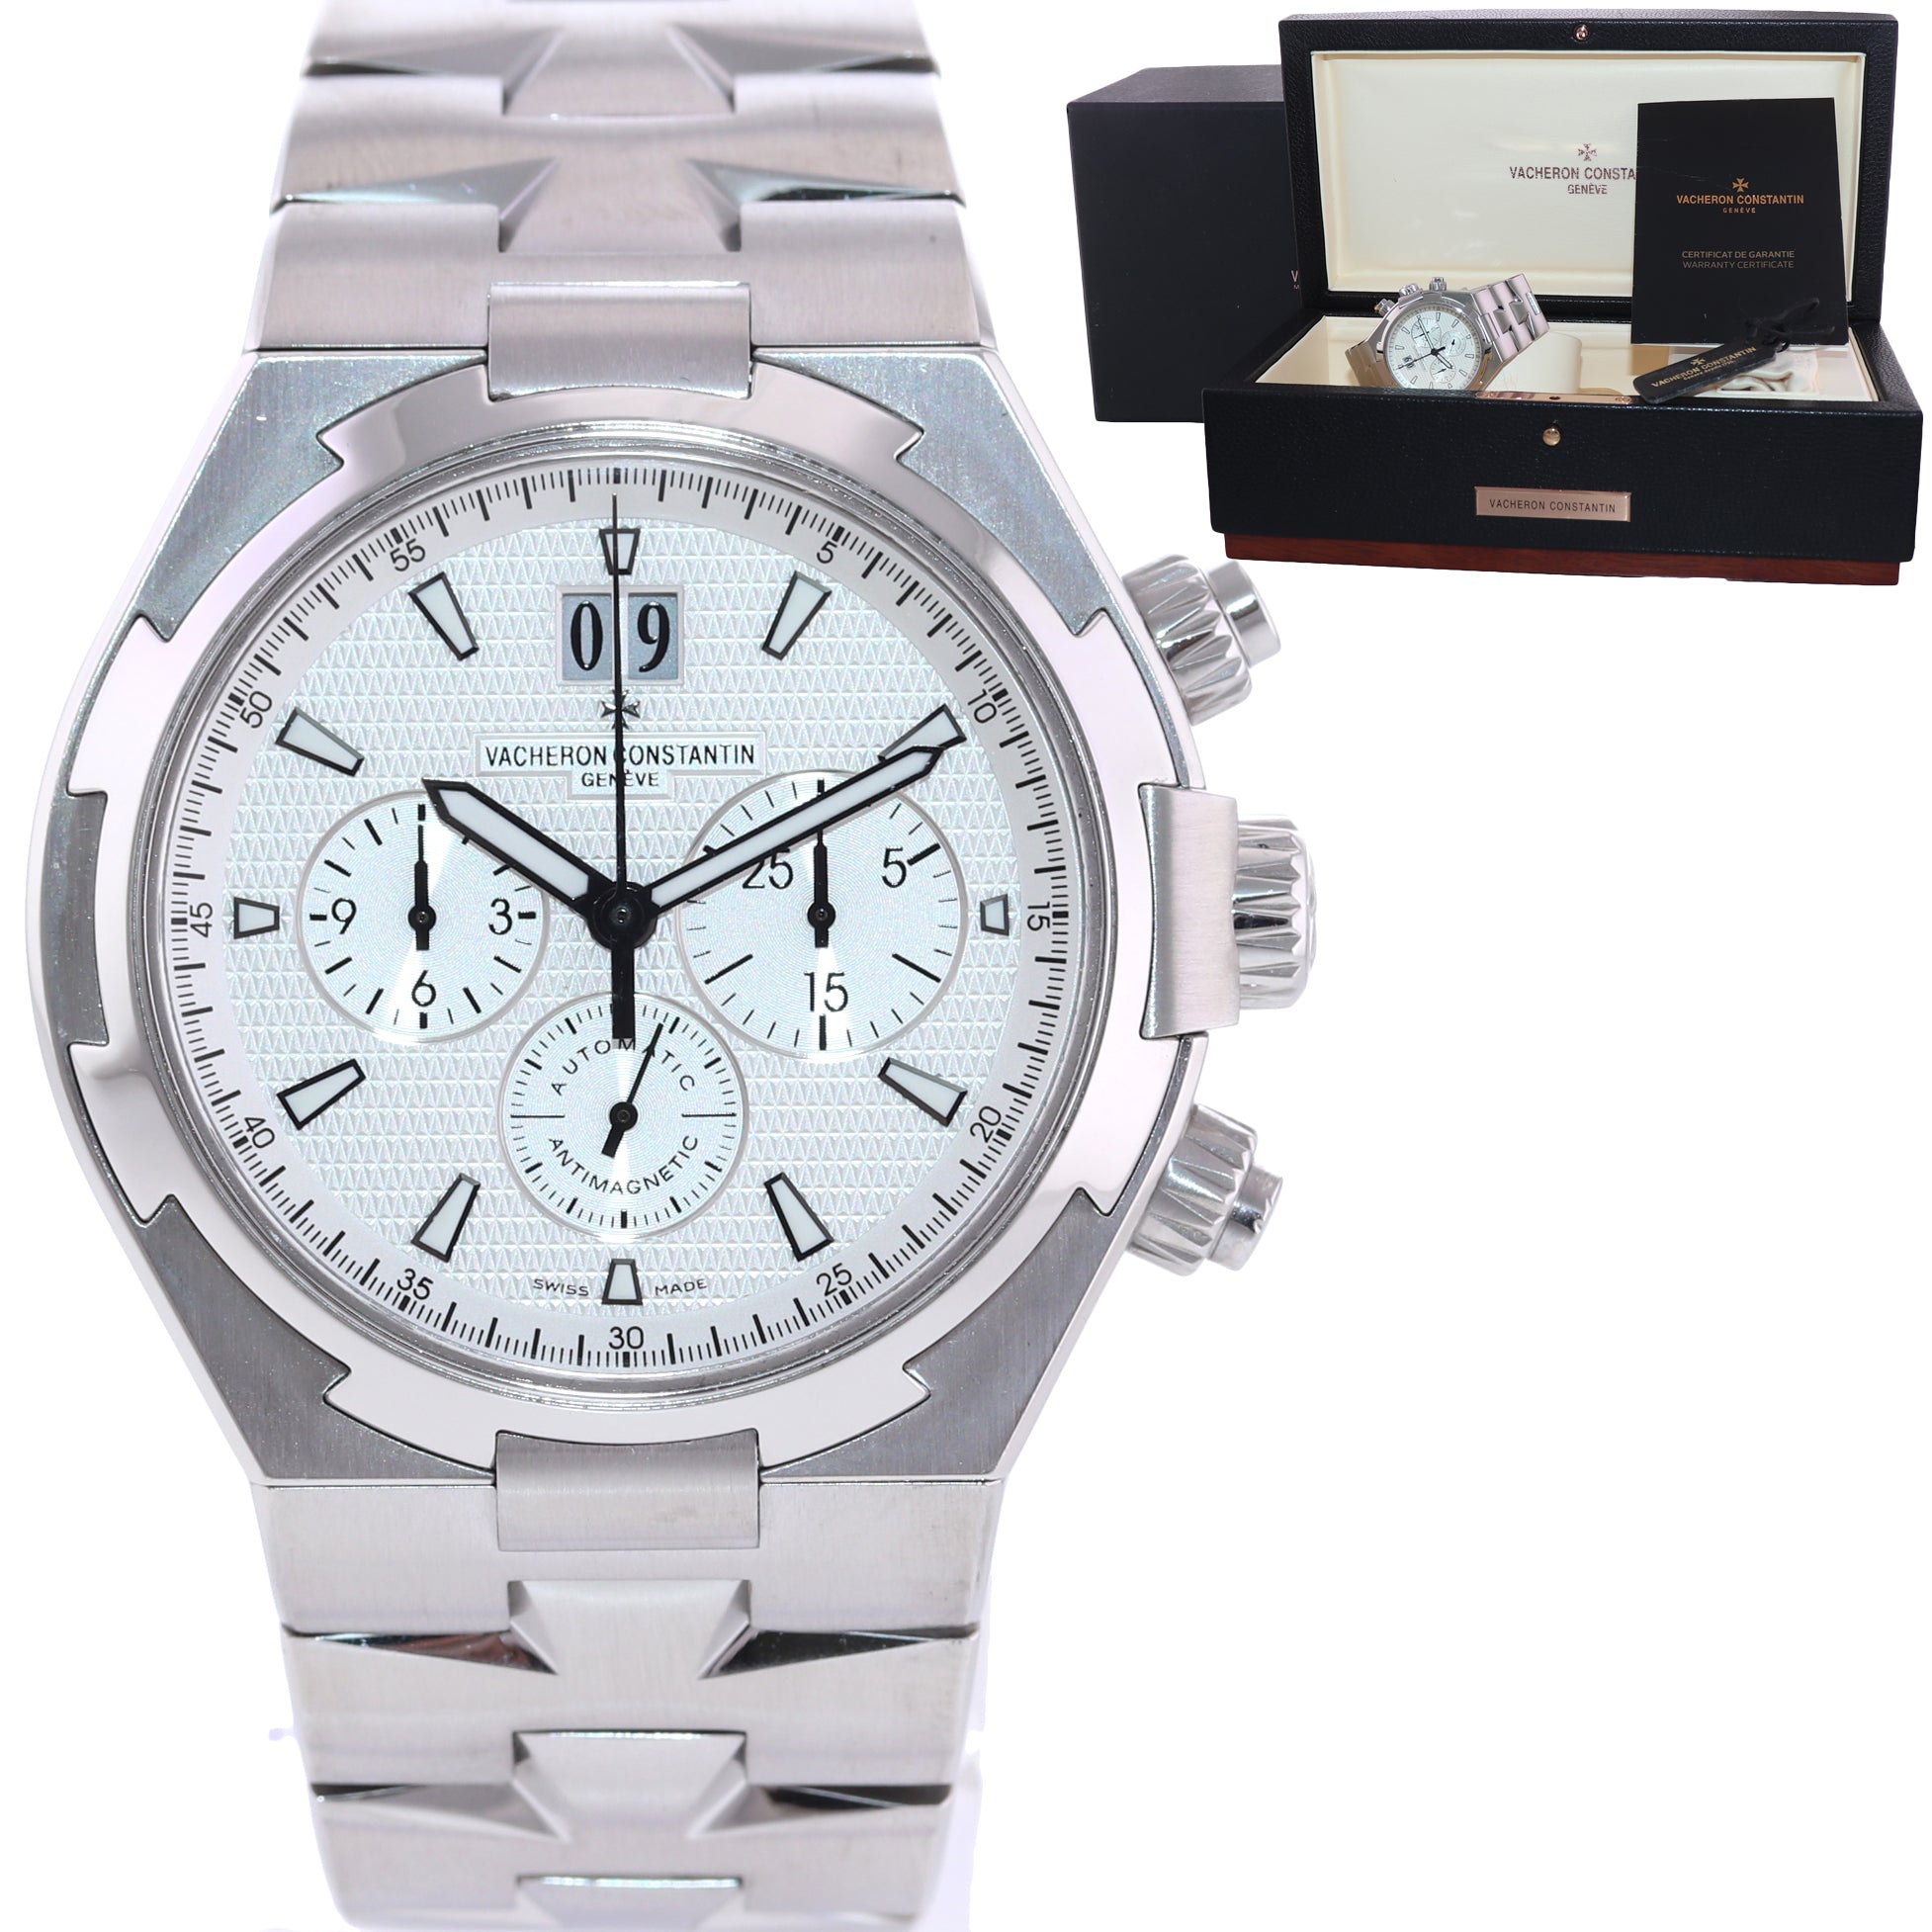 PAPERS Vacheron Constantin Overseas 49150 42mm White Steel Chronograph Watch Box